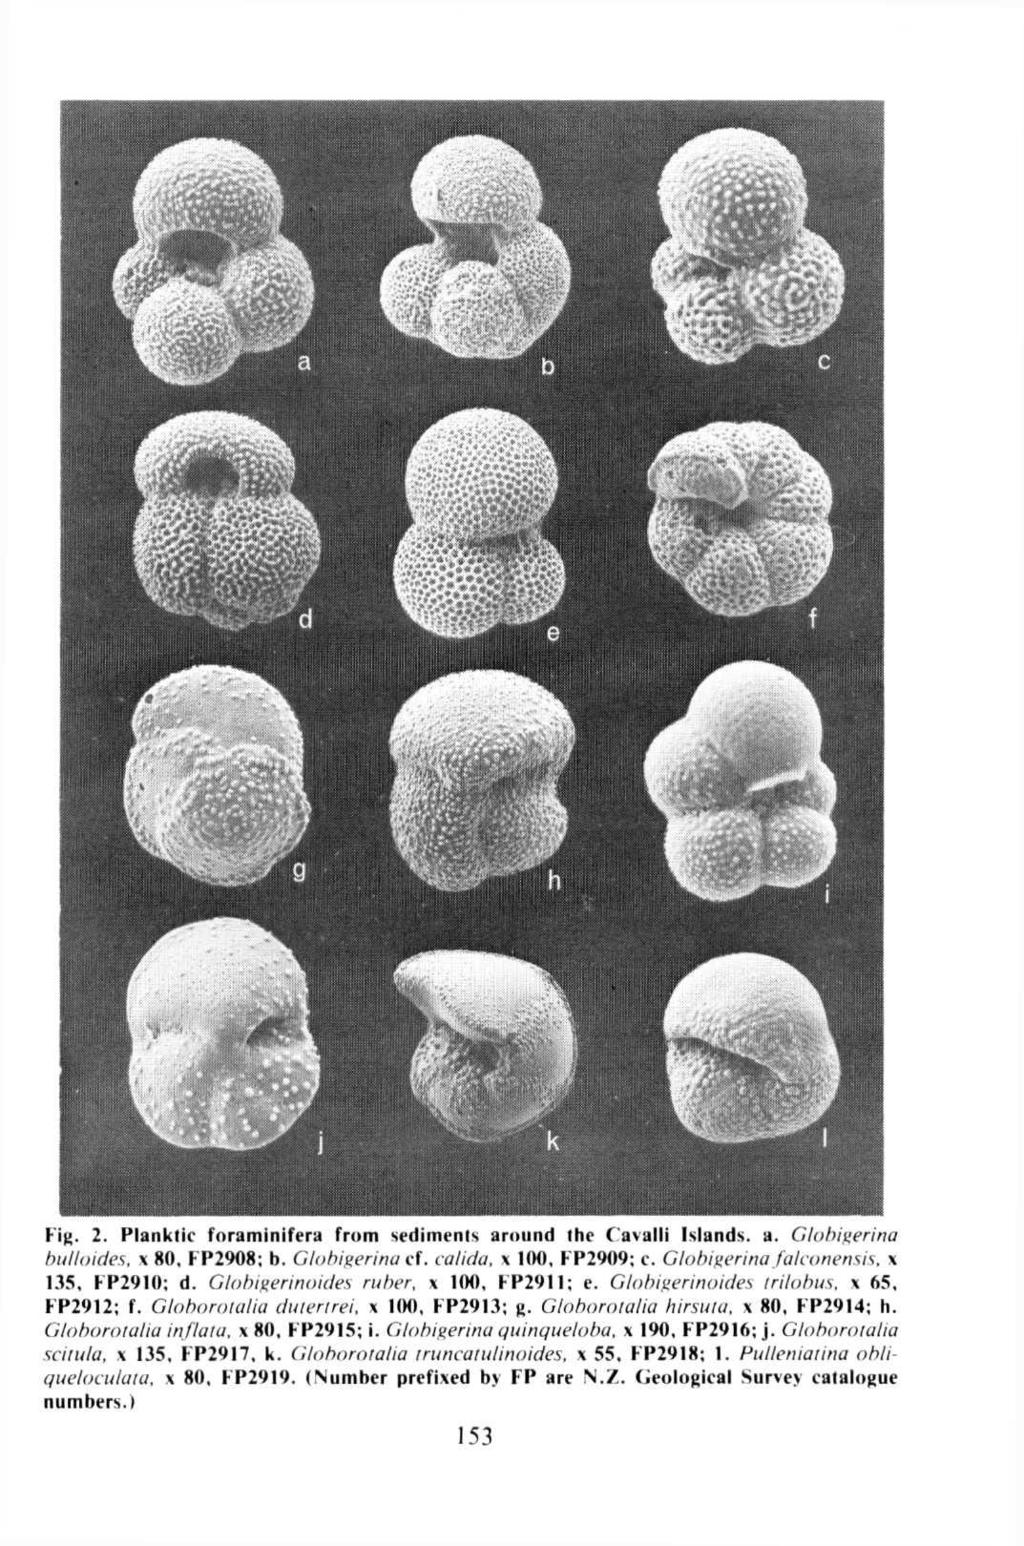 Fig. 2. Planktic foraminifera from sediments around the Cavalli Islands, a. Globigerina bulloides, 80, FP2908; b. Globigerina cf. calida, 100, FP2909; c. Globigerina falconensis. 135, FP2910; d.